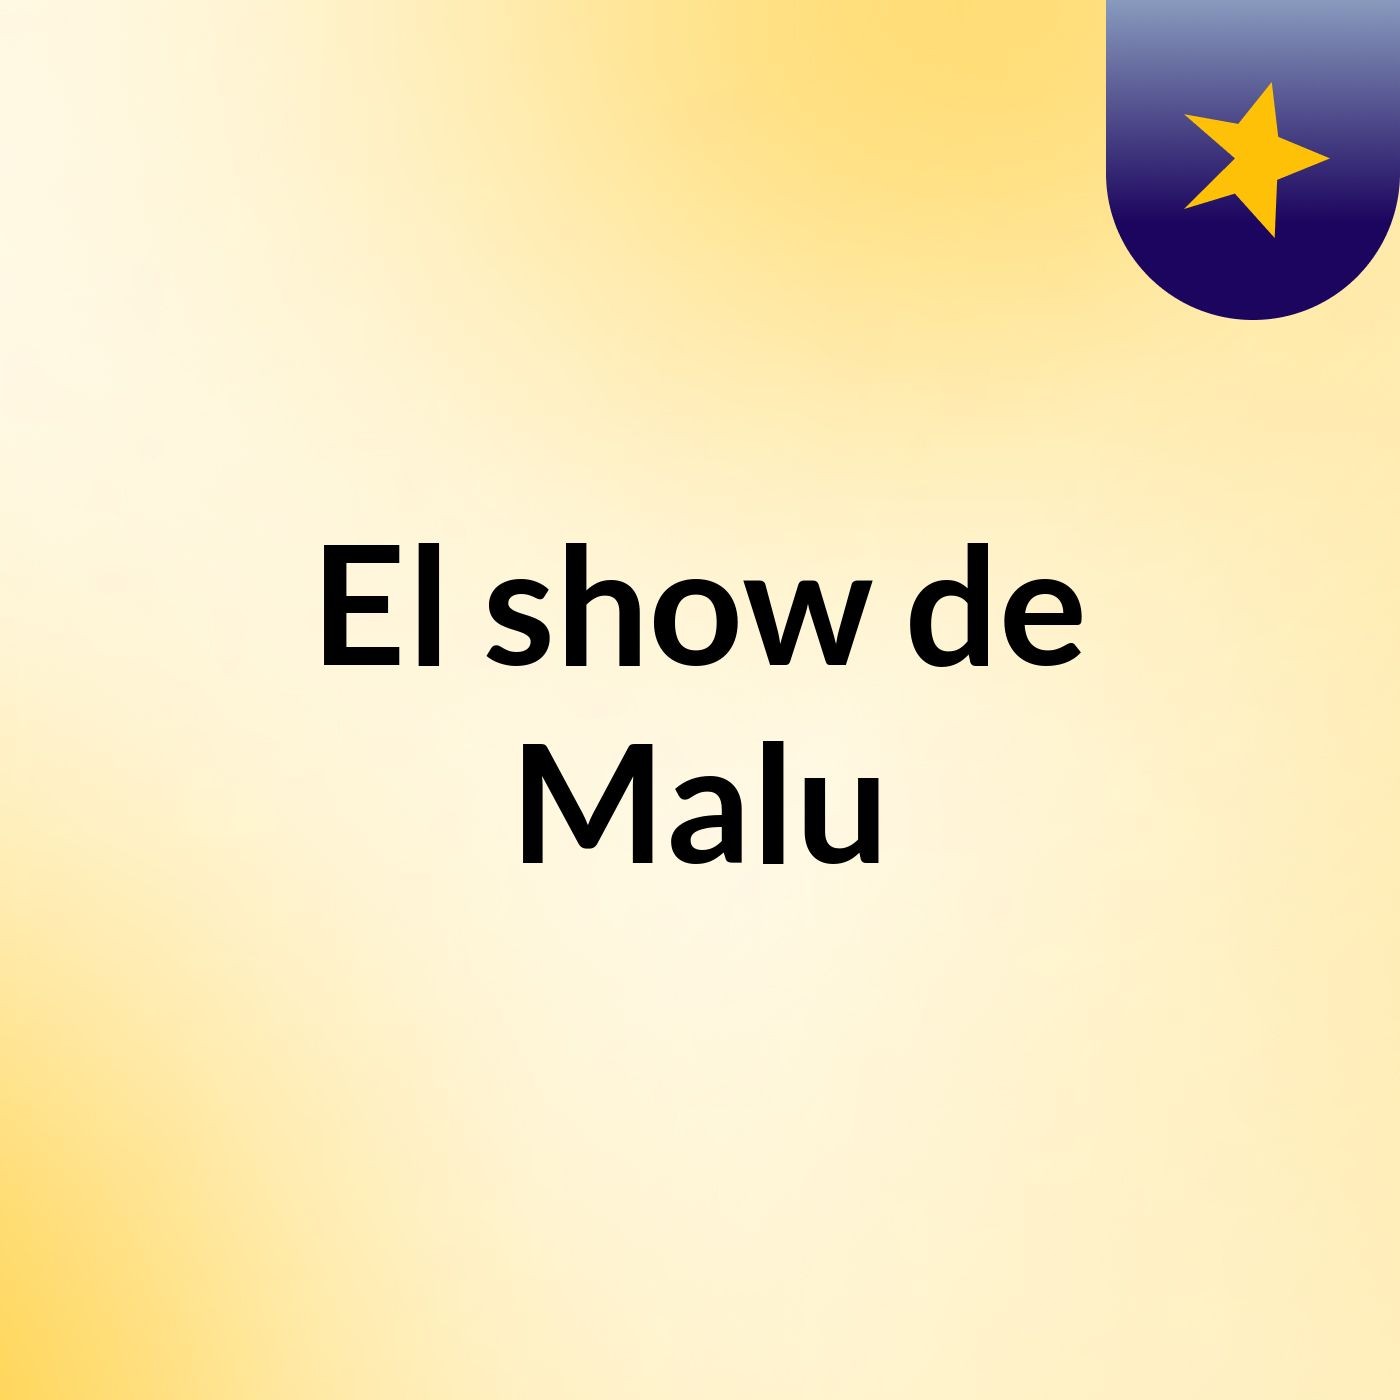 El show de Malu